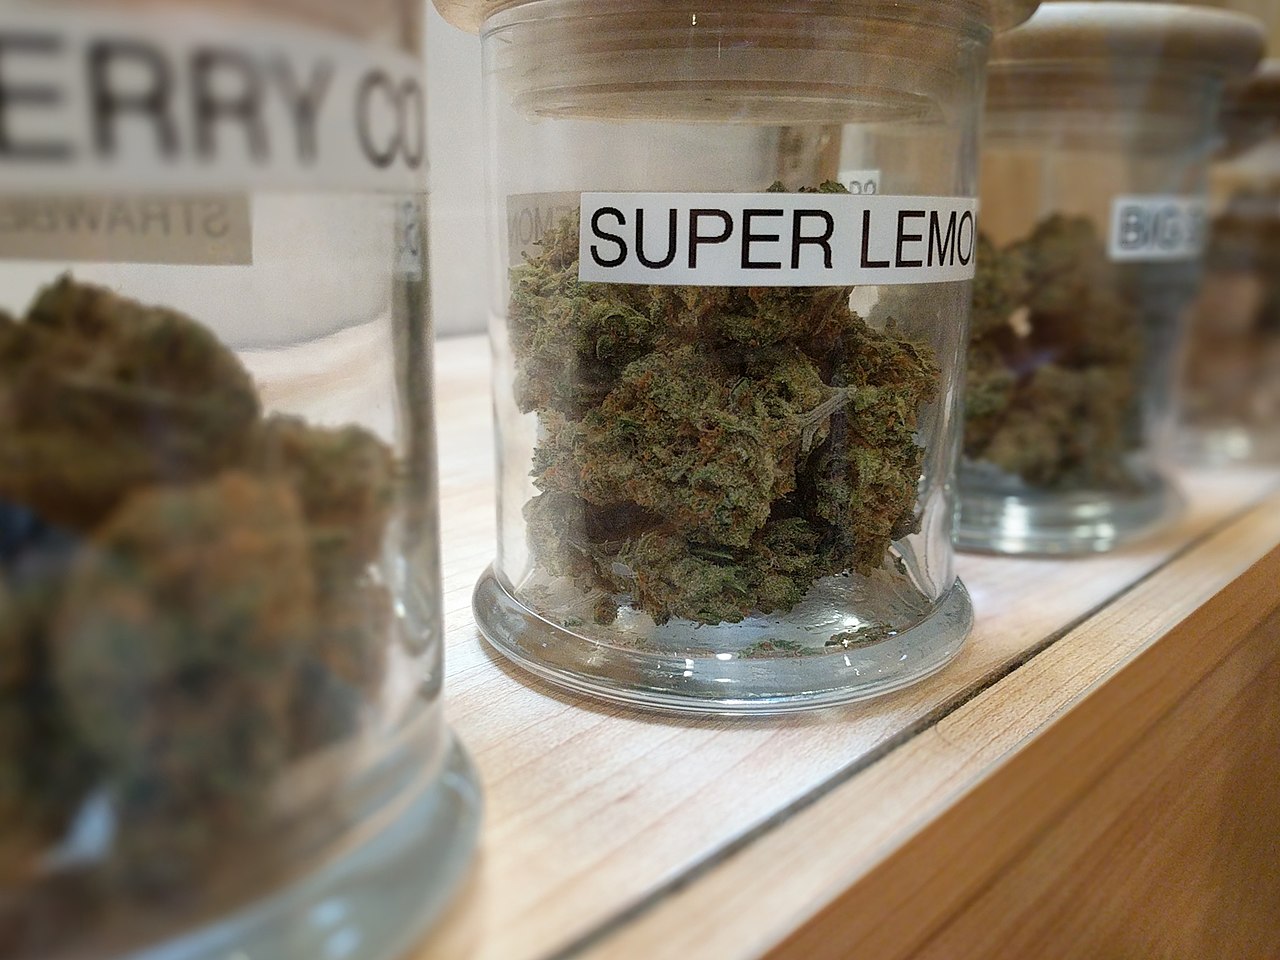 Cannabis strains in jars at a marijuana dispensary